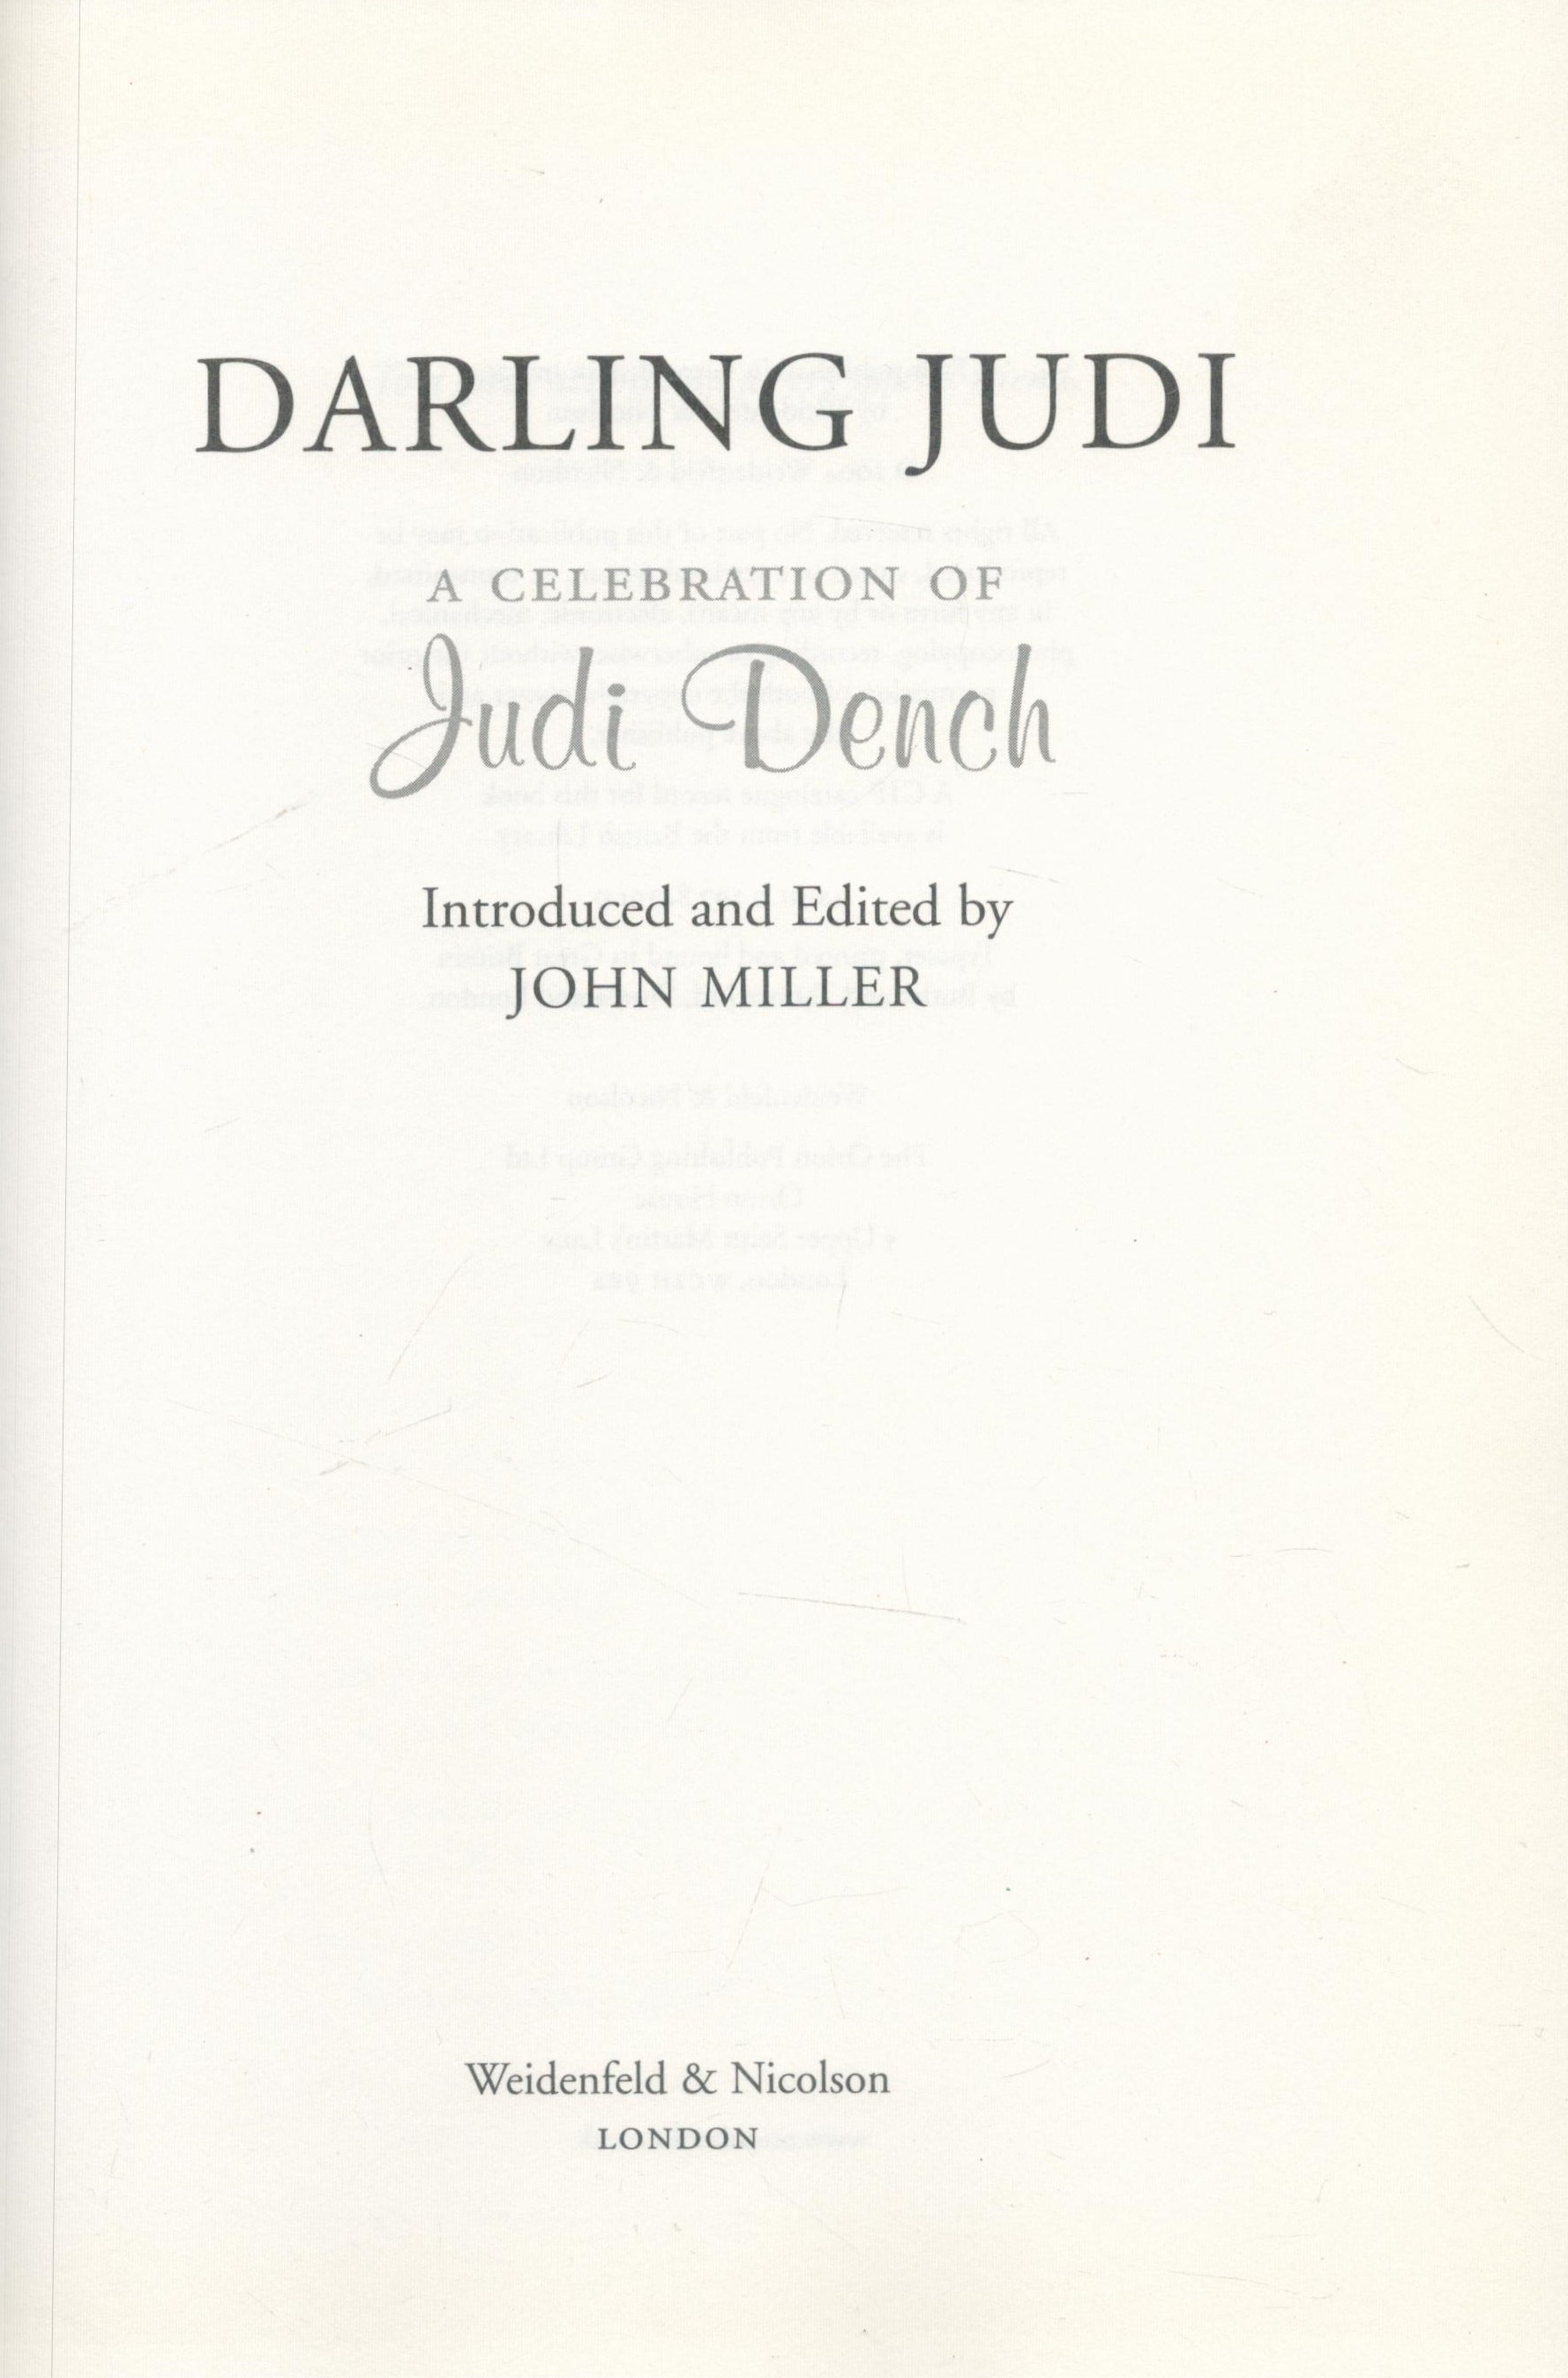 Darling Judi - A Celebration of Judi Dench Edited by John Miller 2004 First Edition Hardback book - Image 2 of 3